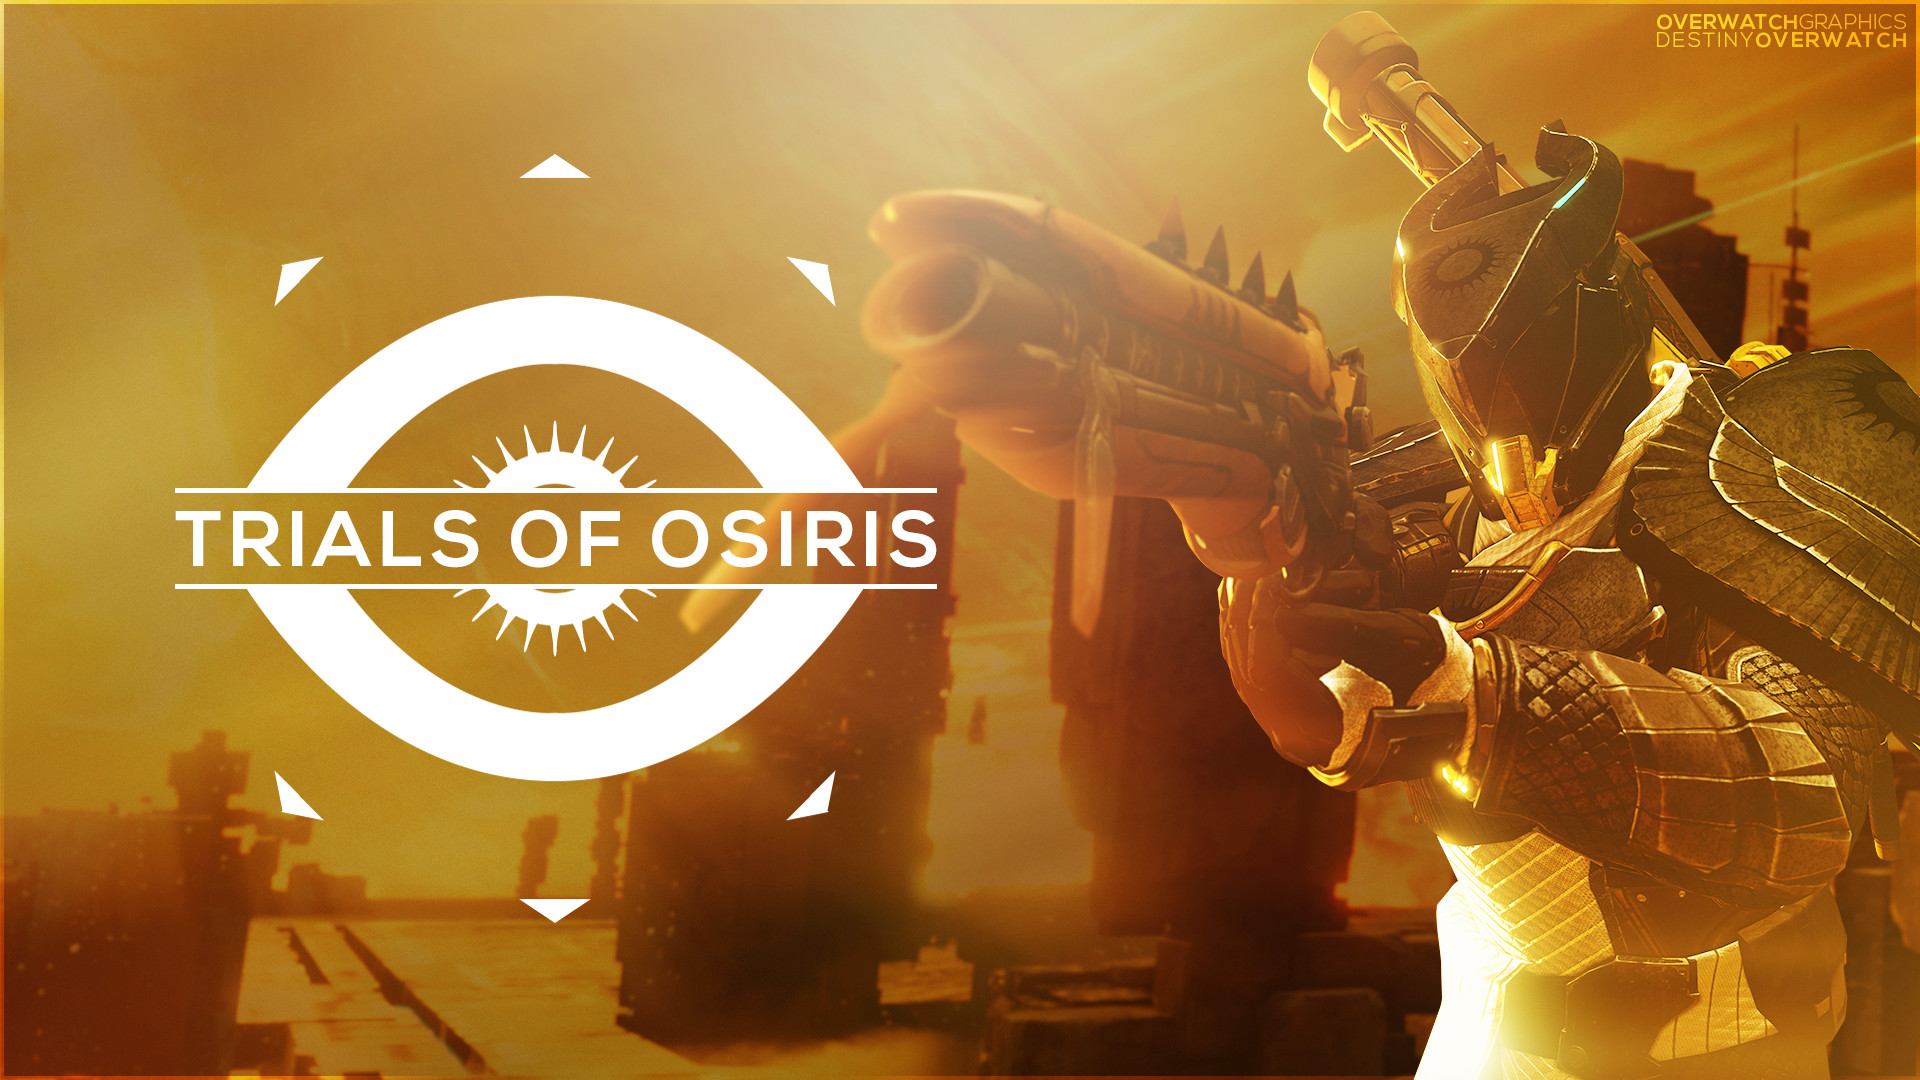 1920x1080 ... OverwatchGraphics Destiny - Trials of Osiris Titan Wallpaper by  OverwatchGraphics